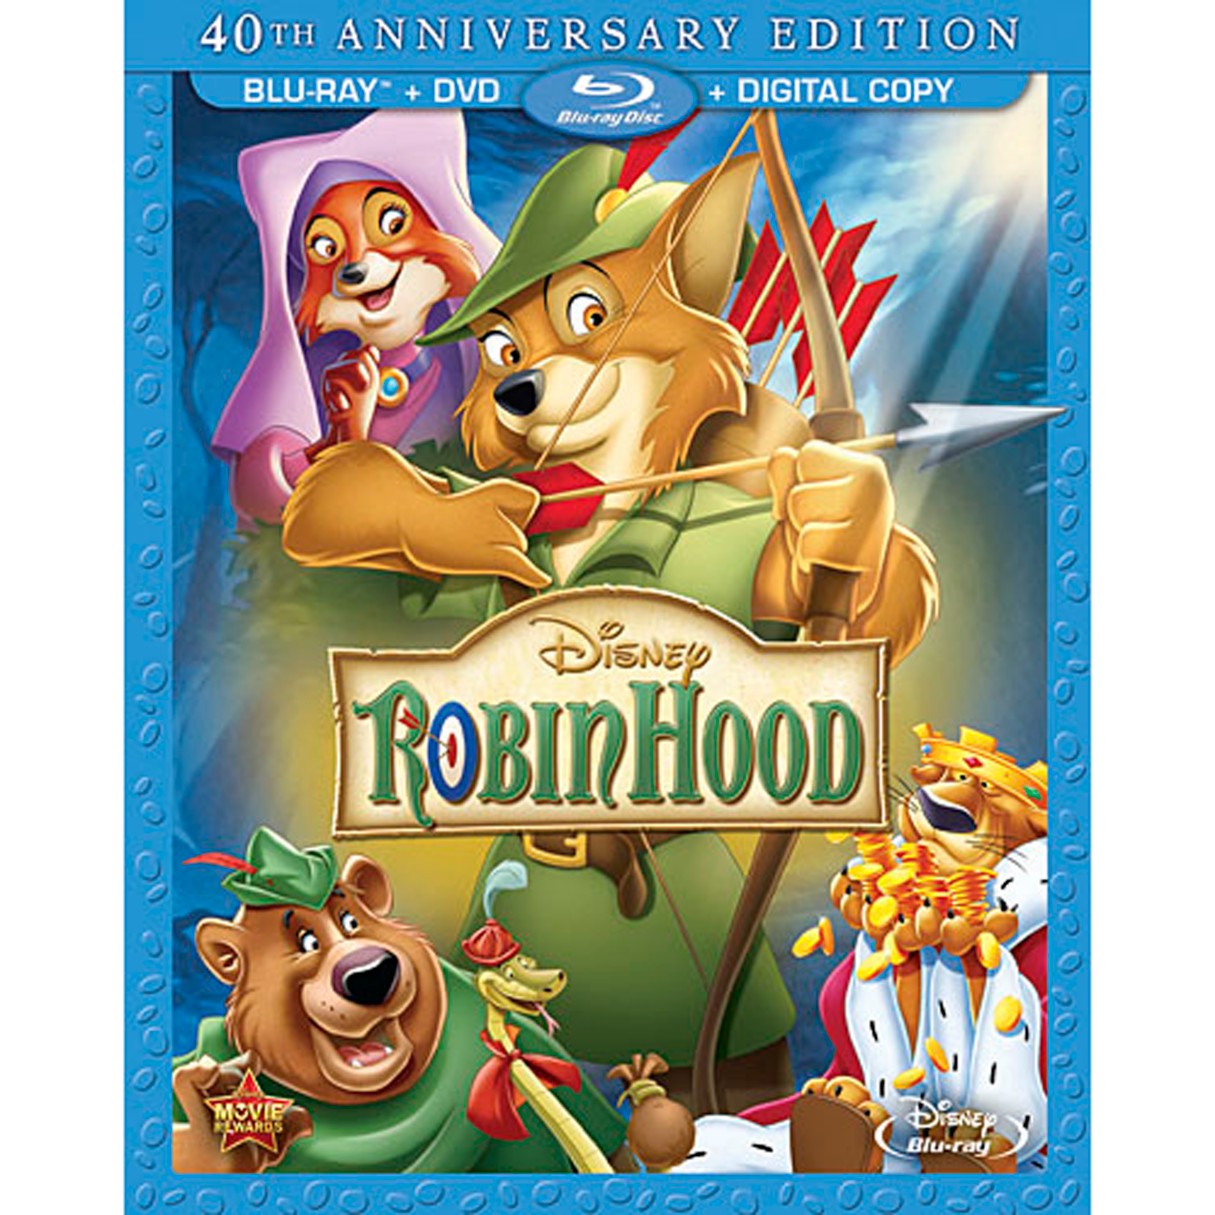 Robin Hood Blu-ray and DVD Combo Pack